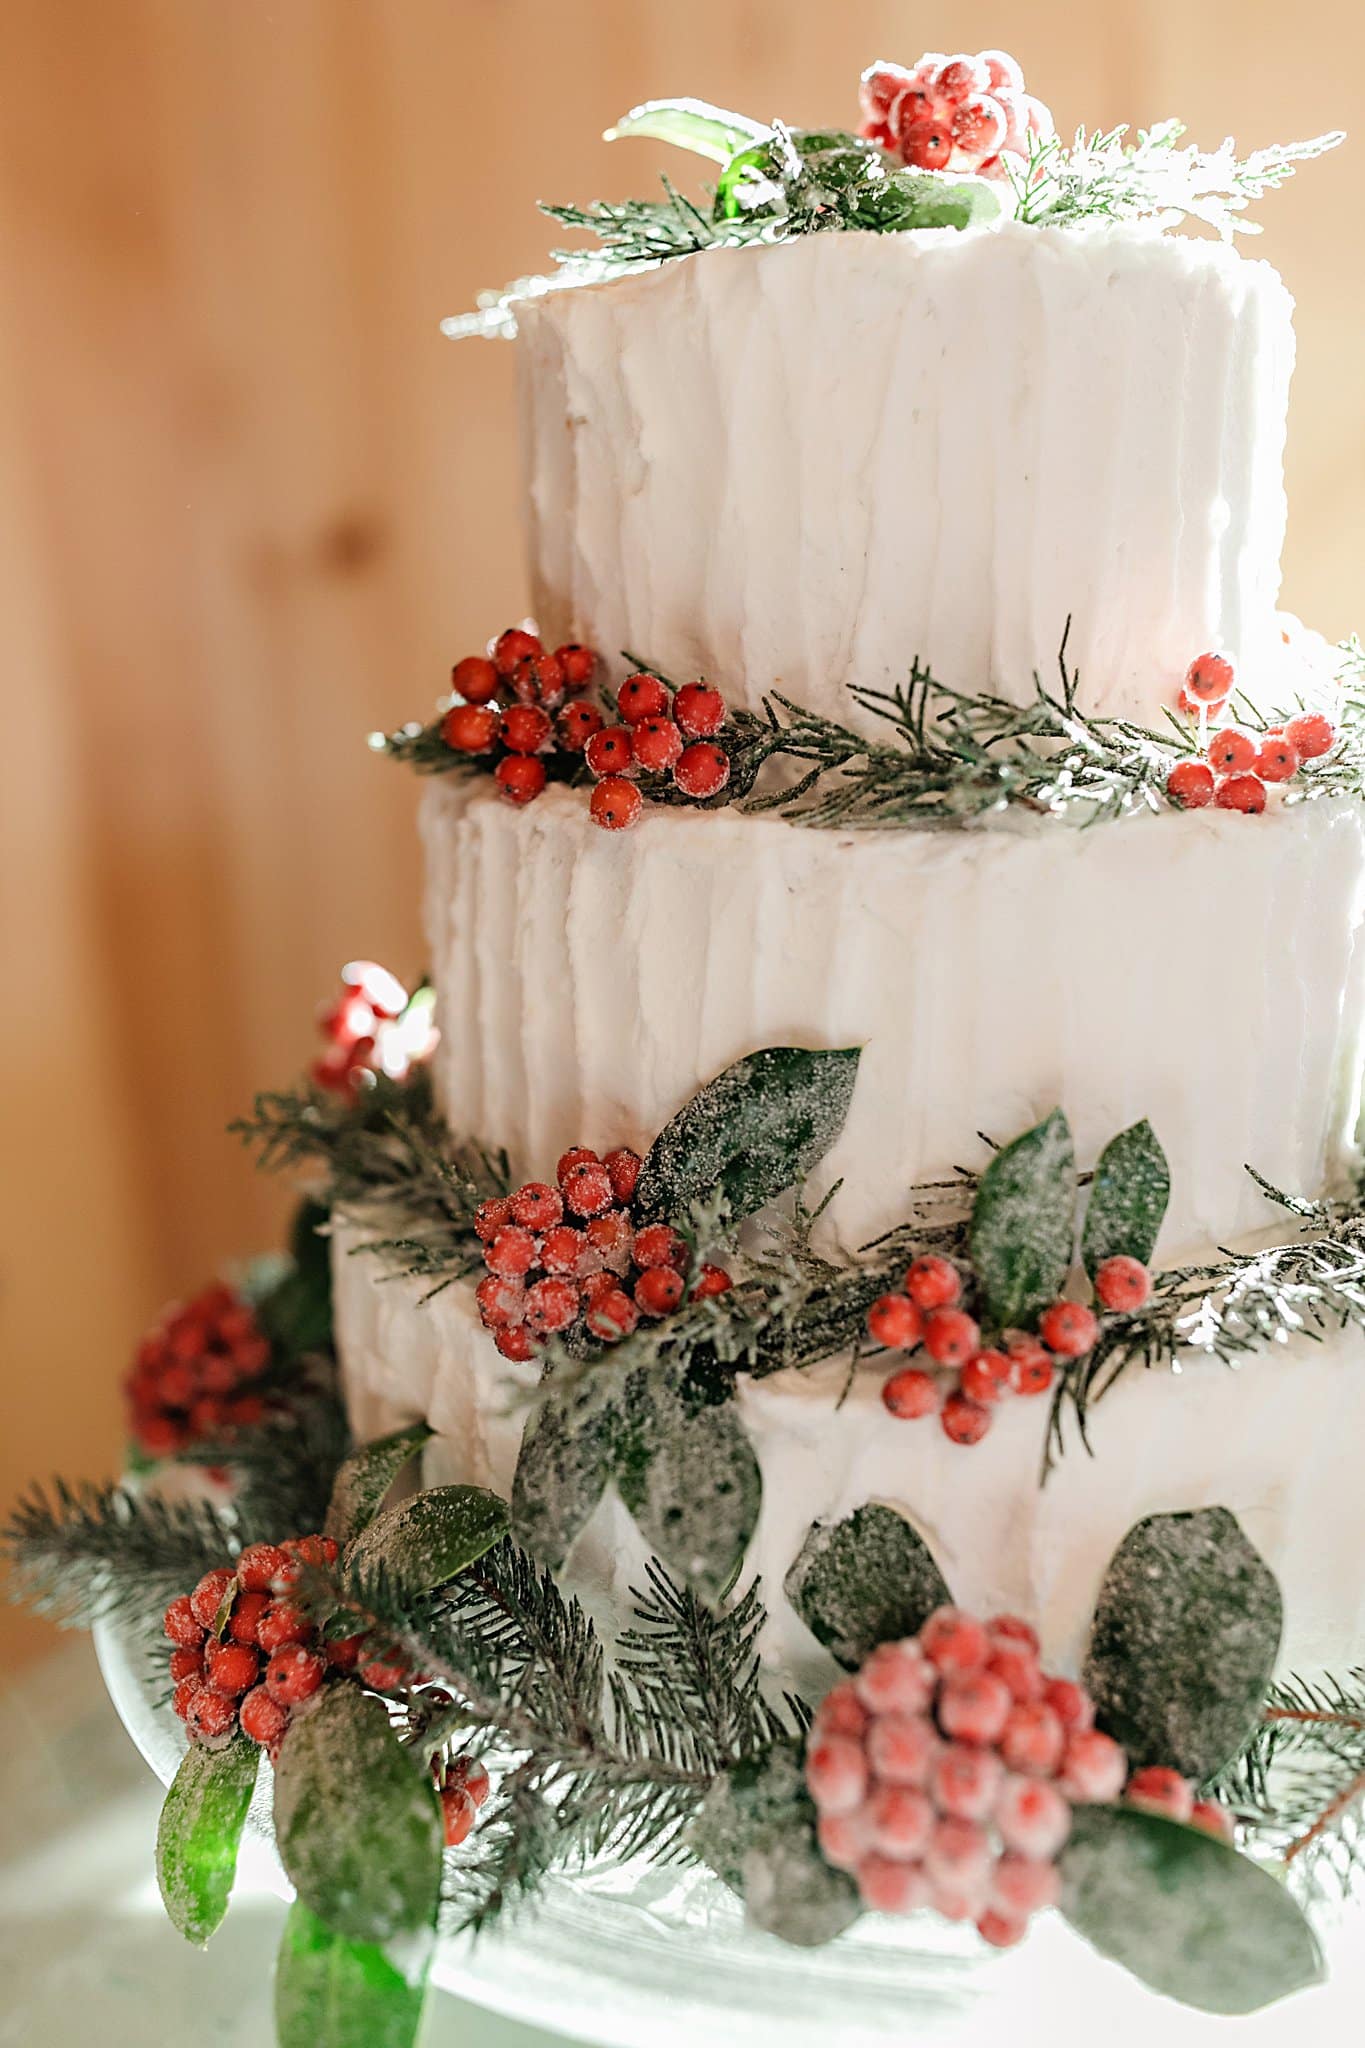 Festive Christmas Wedding Ideas Cake Holly Berries